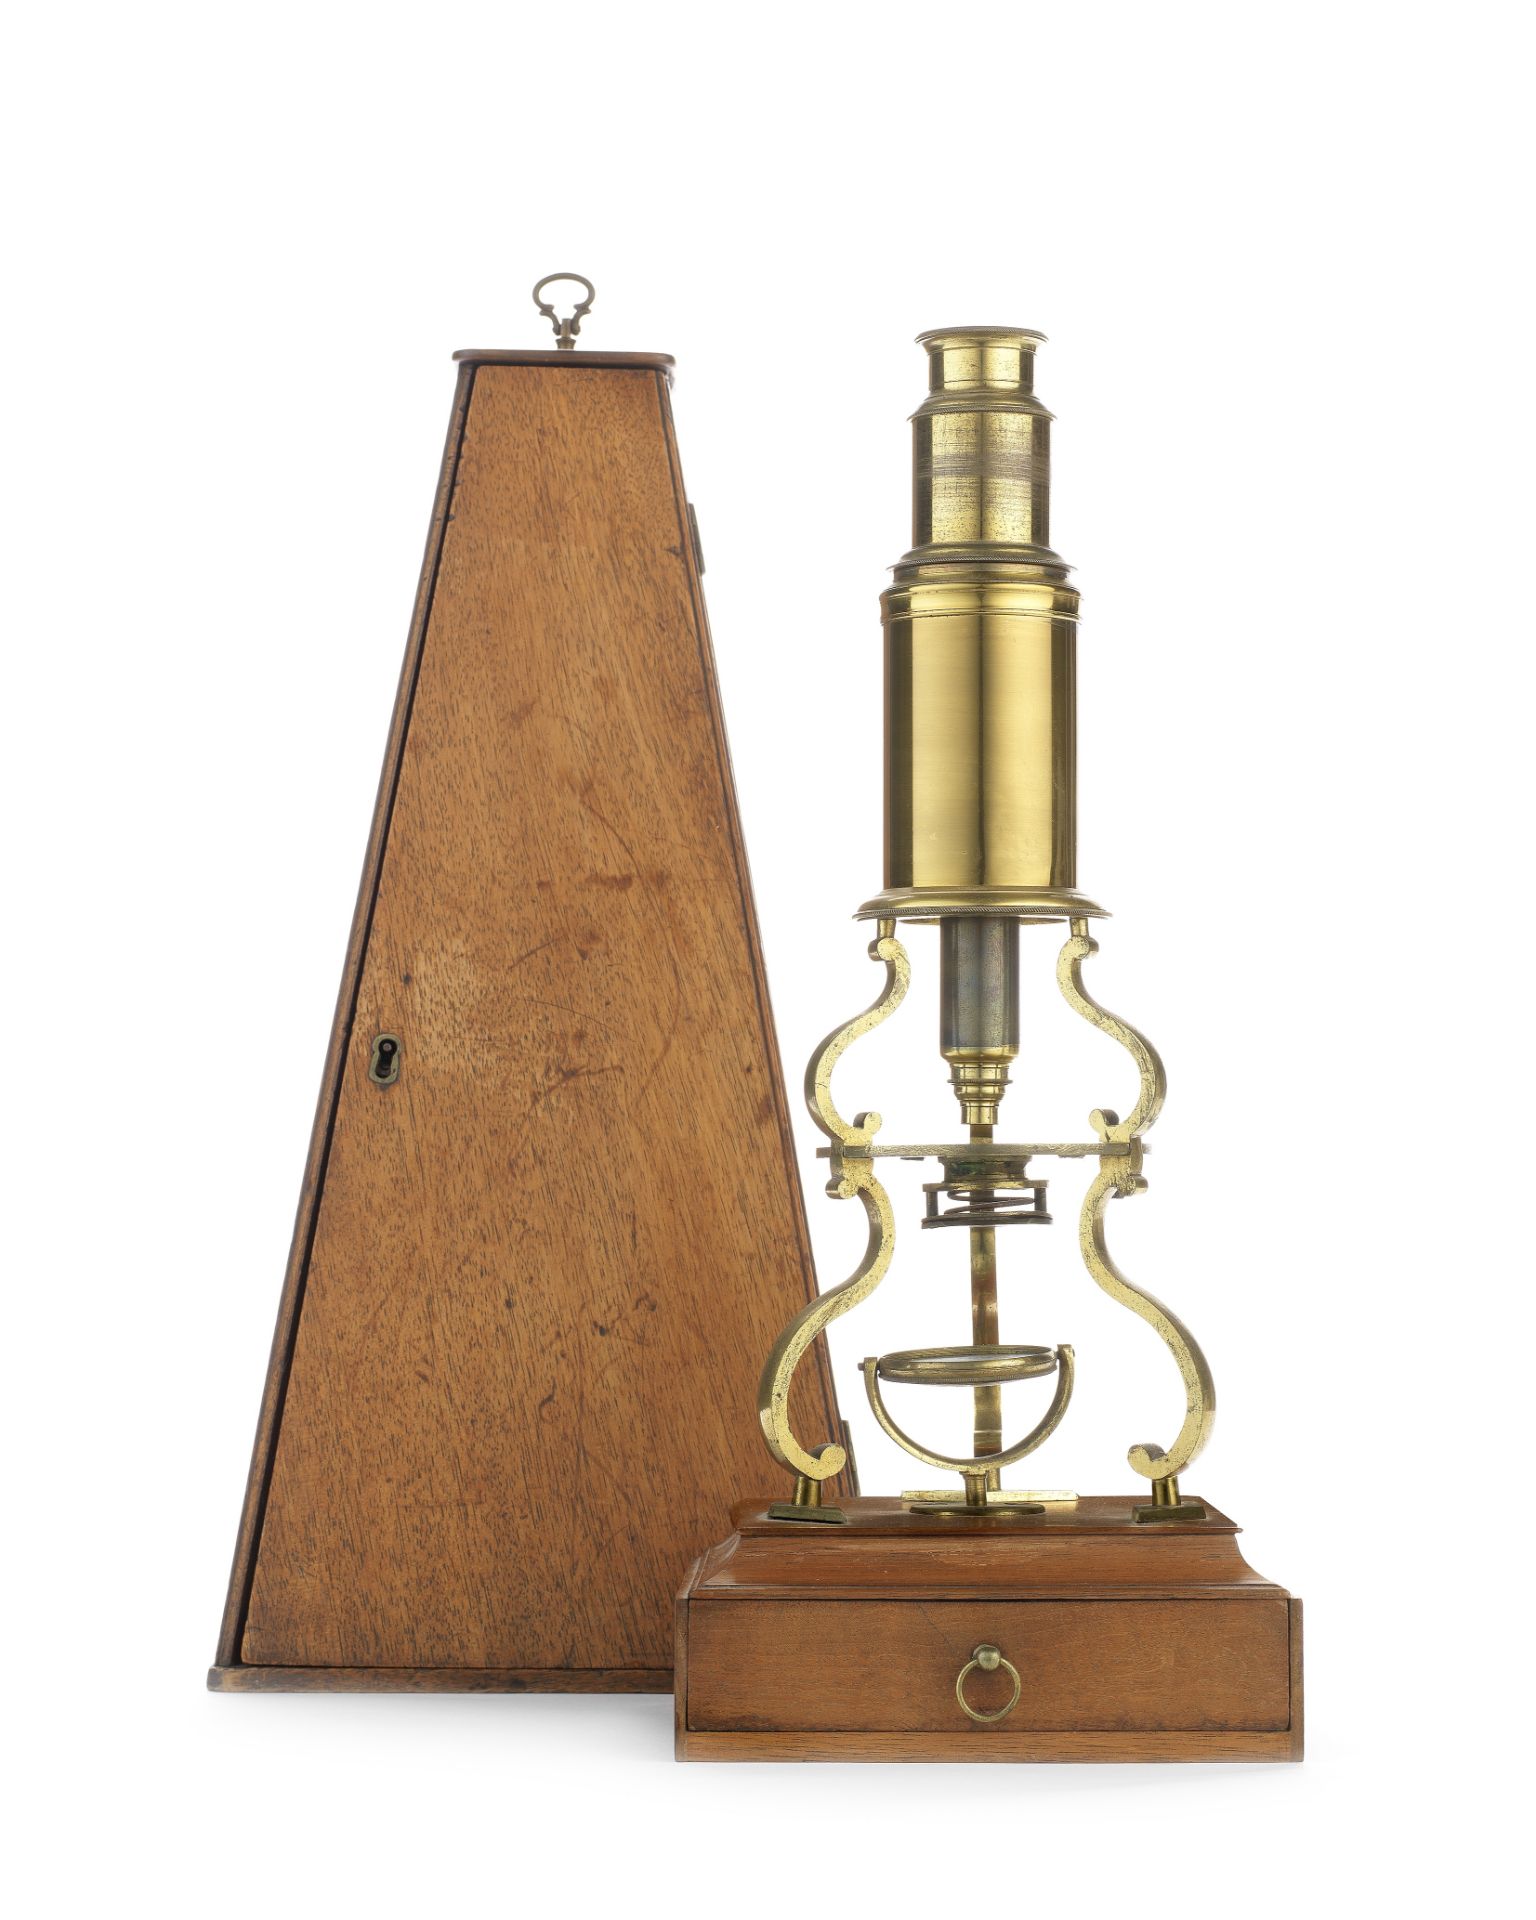 A William Harris brass Culpeper-type compound monocular microscope, English, early 19th century,